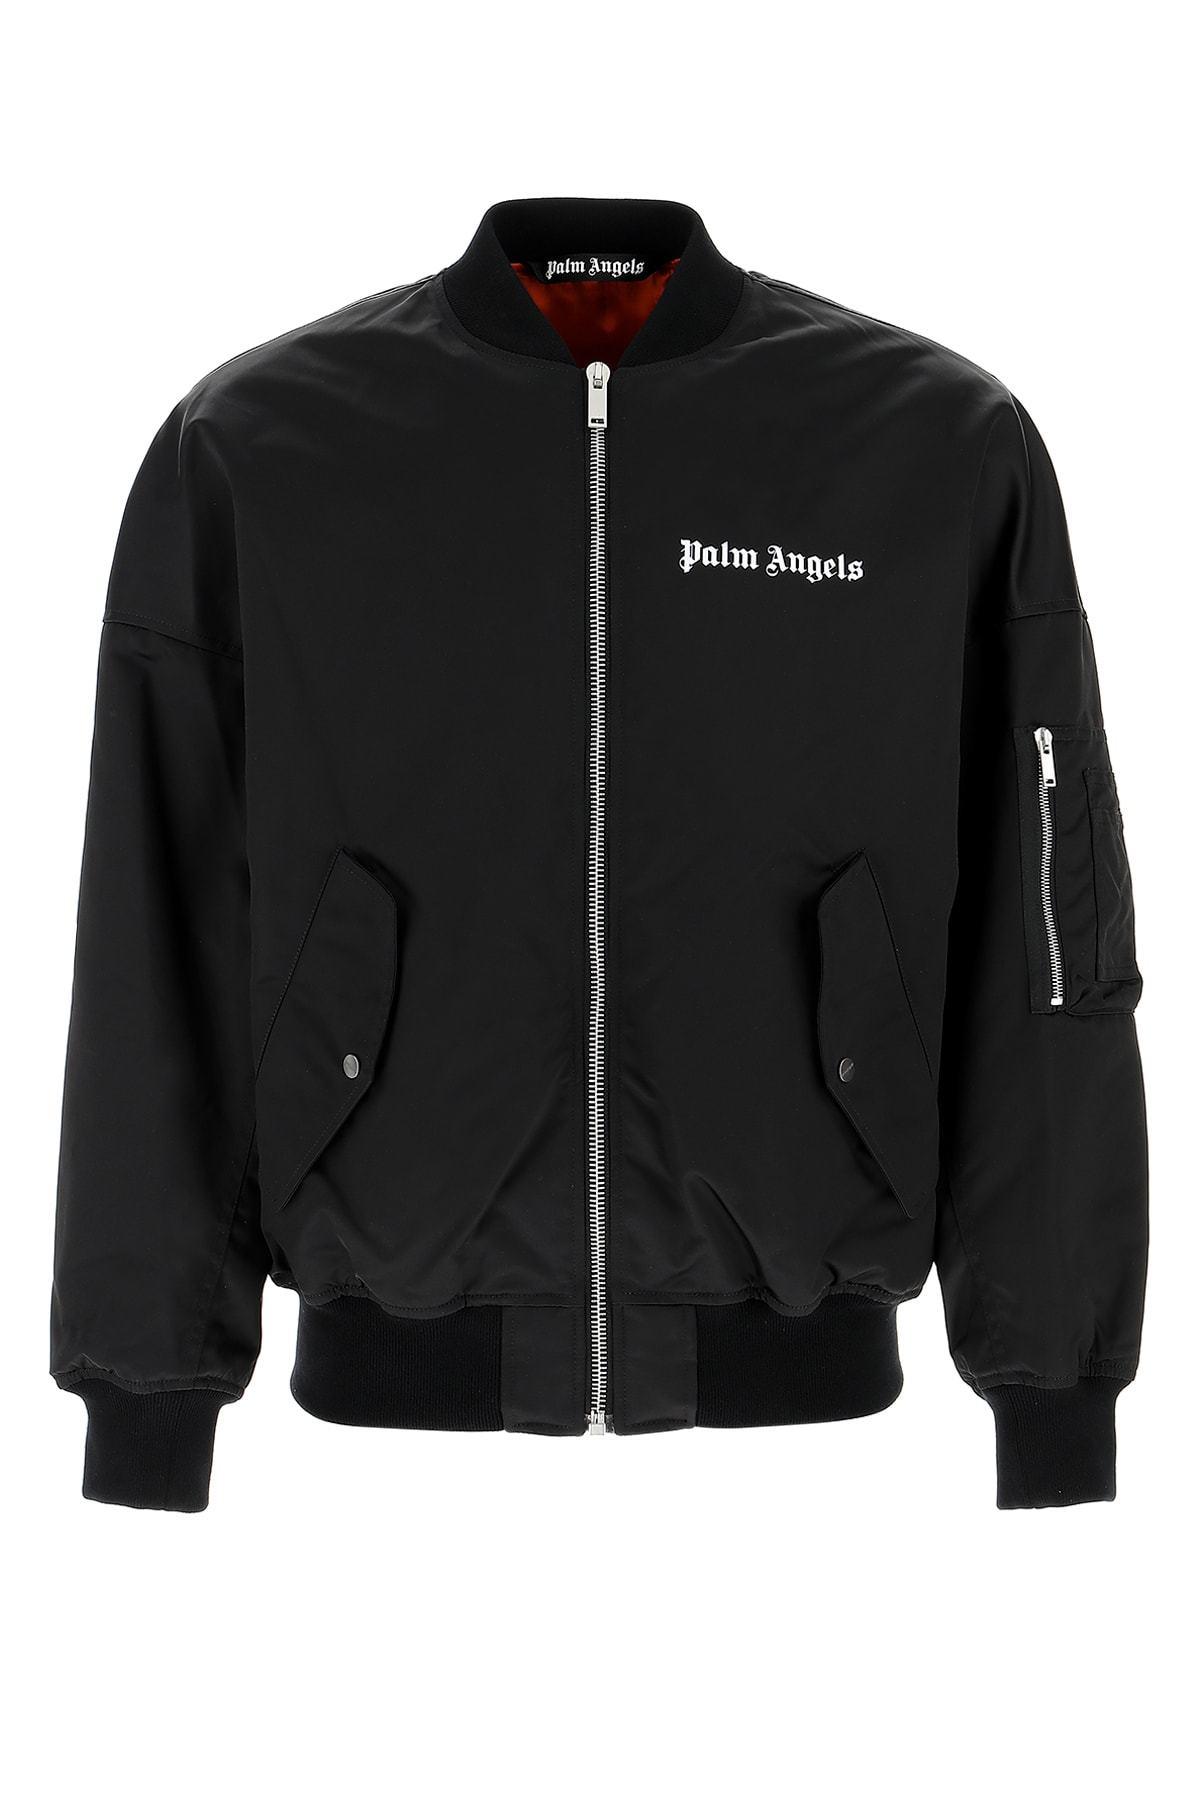 Palm Angels Cotton Logo Bomber Jacket in Black for Men - Save 8% - Lyst